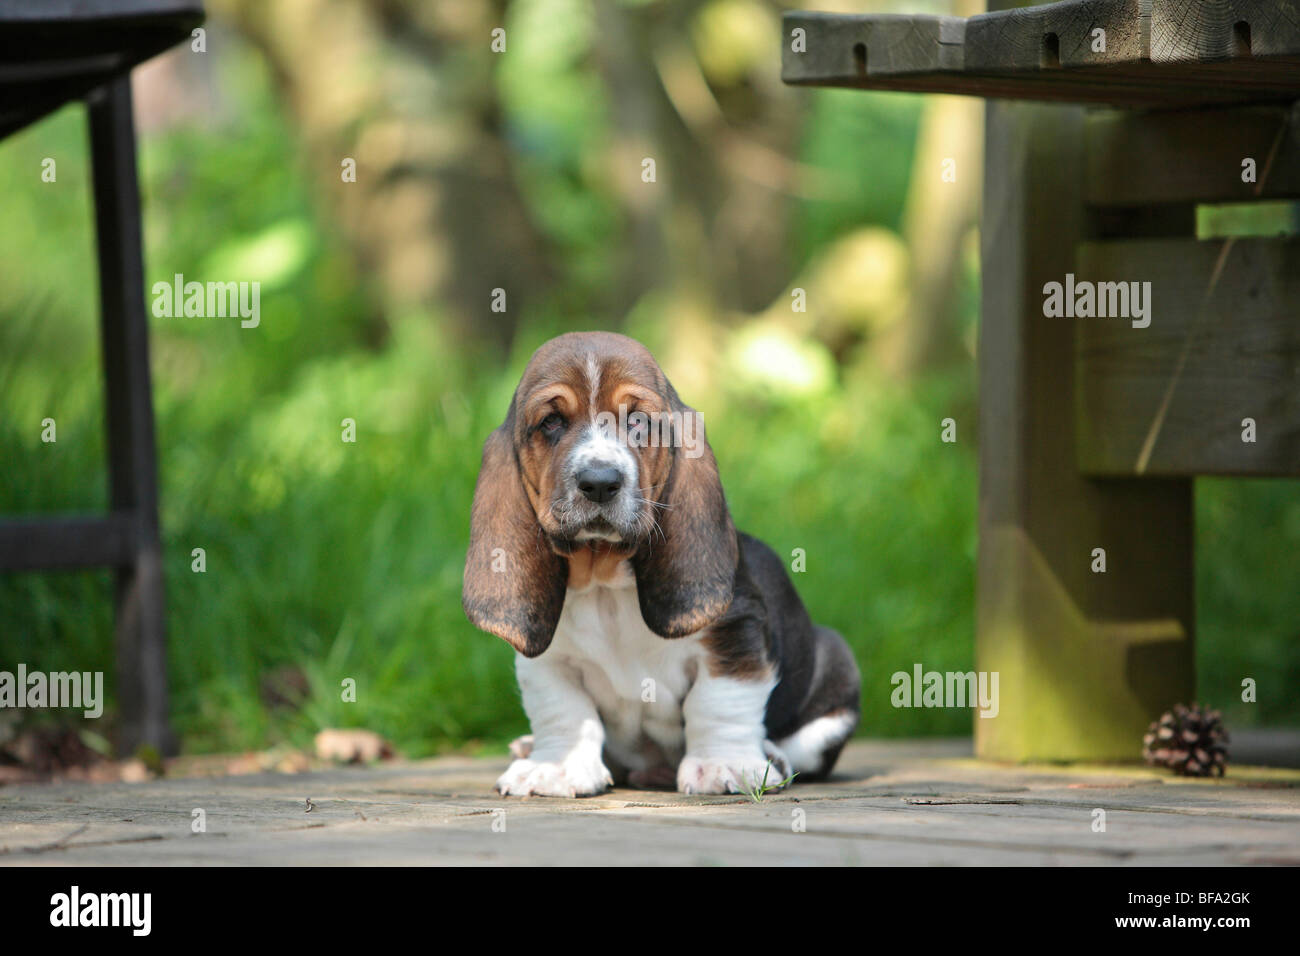 Basset Hound (Canis lupus familiaris) f., cachorro sentado en una terraza, Alemania Foto de stock